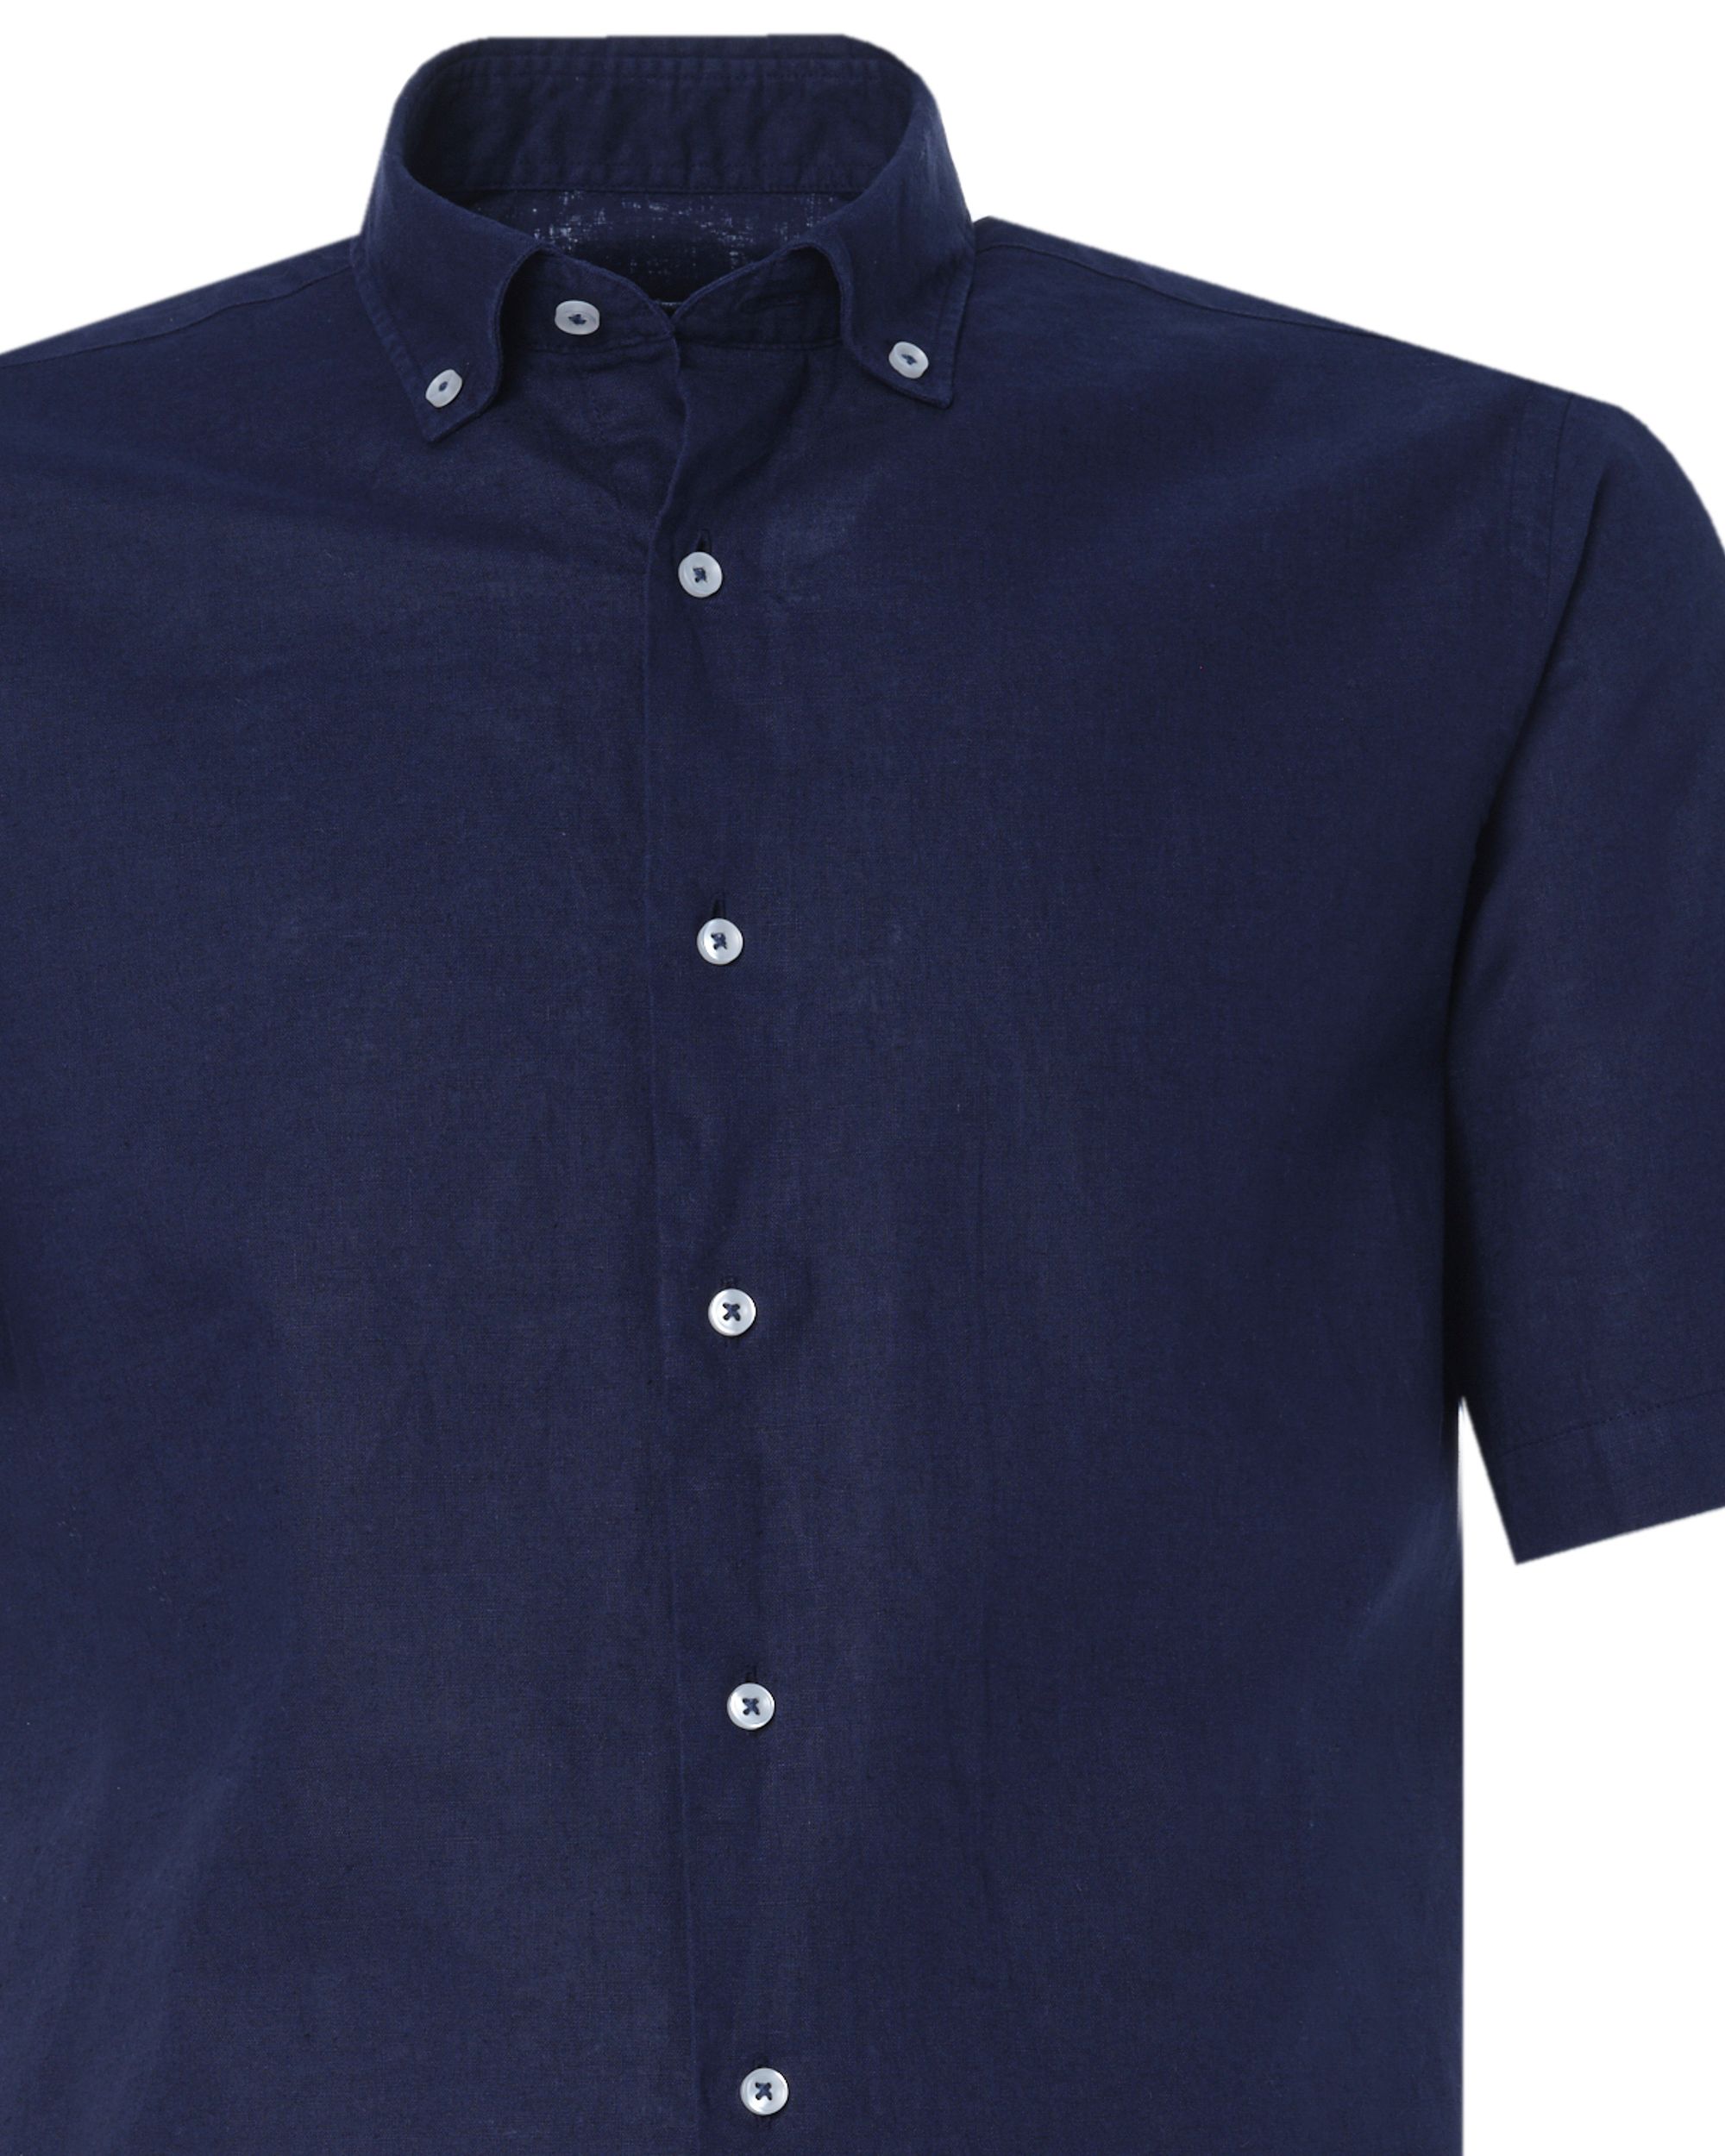 The BLUEPRINT Premium Casual Overhemd KM Donkerblauw uni 077930-002-L